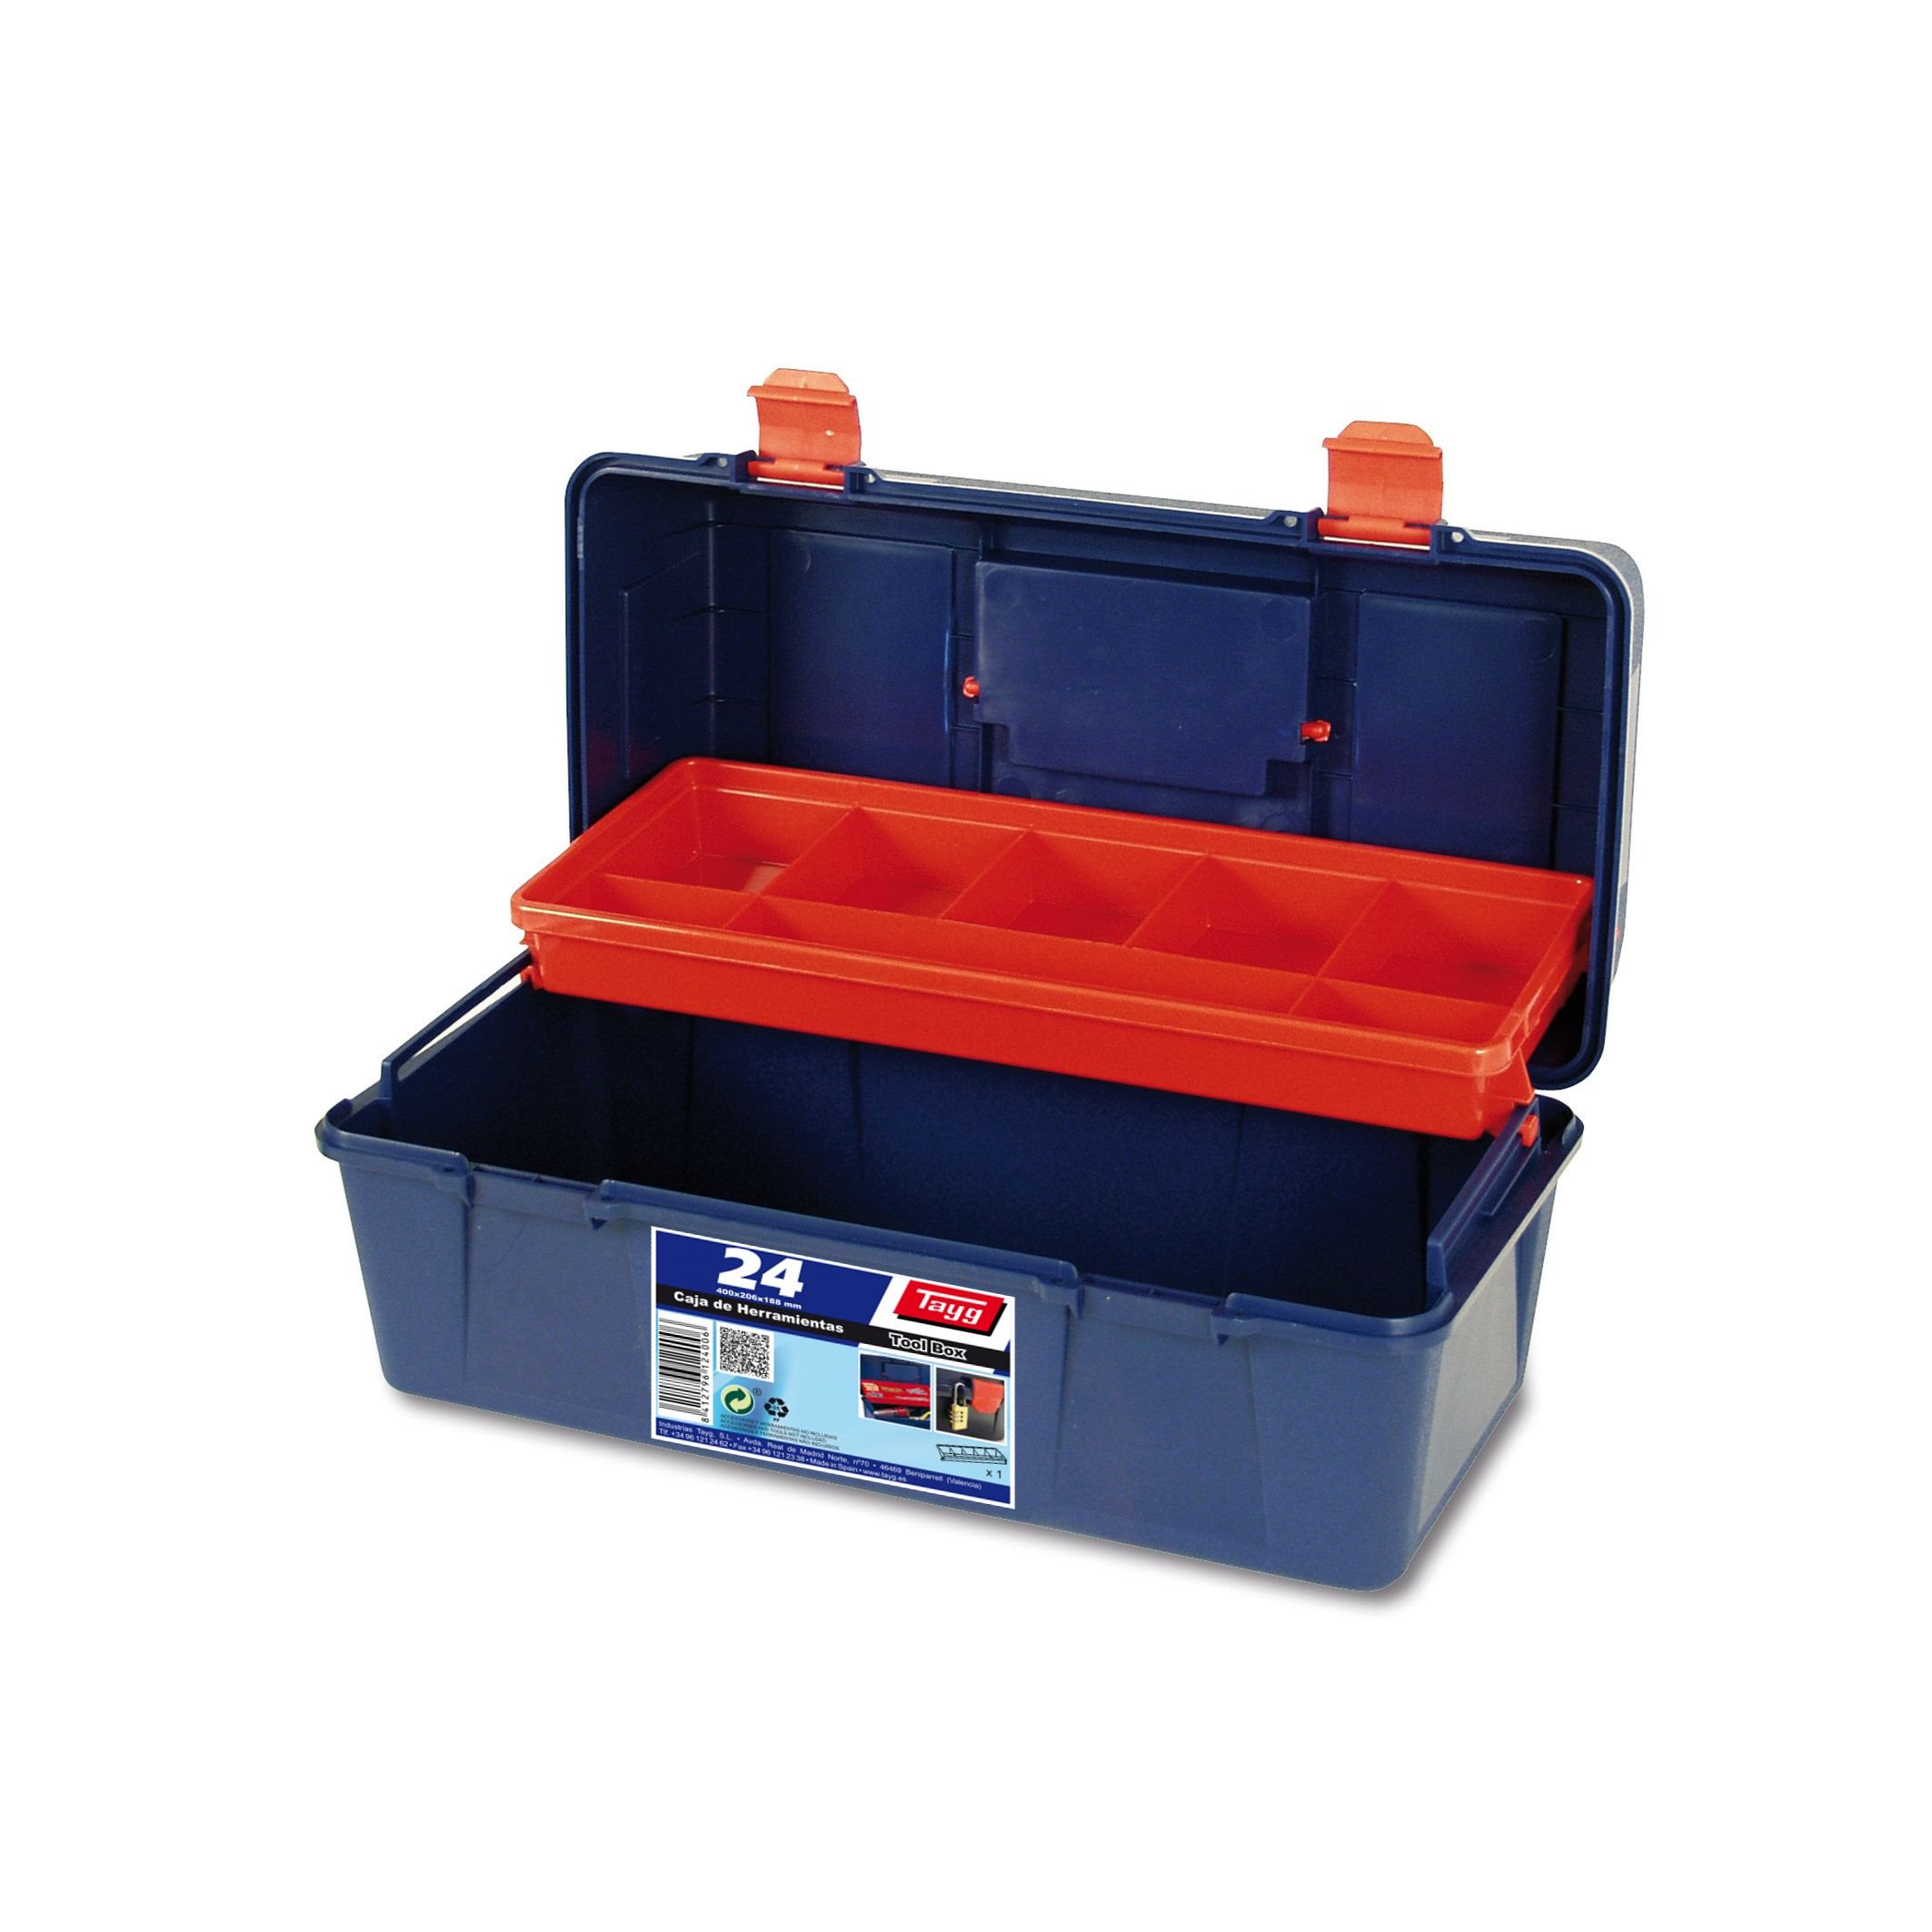 Ящик пластиковый для инструментов Tayg Box 24 Caja htas, 40х20,6х18,8 см, синий (124006) - фото 3